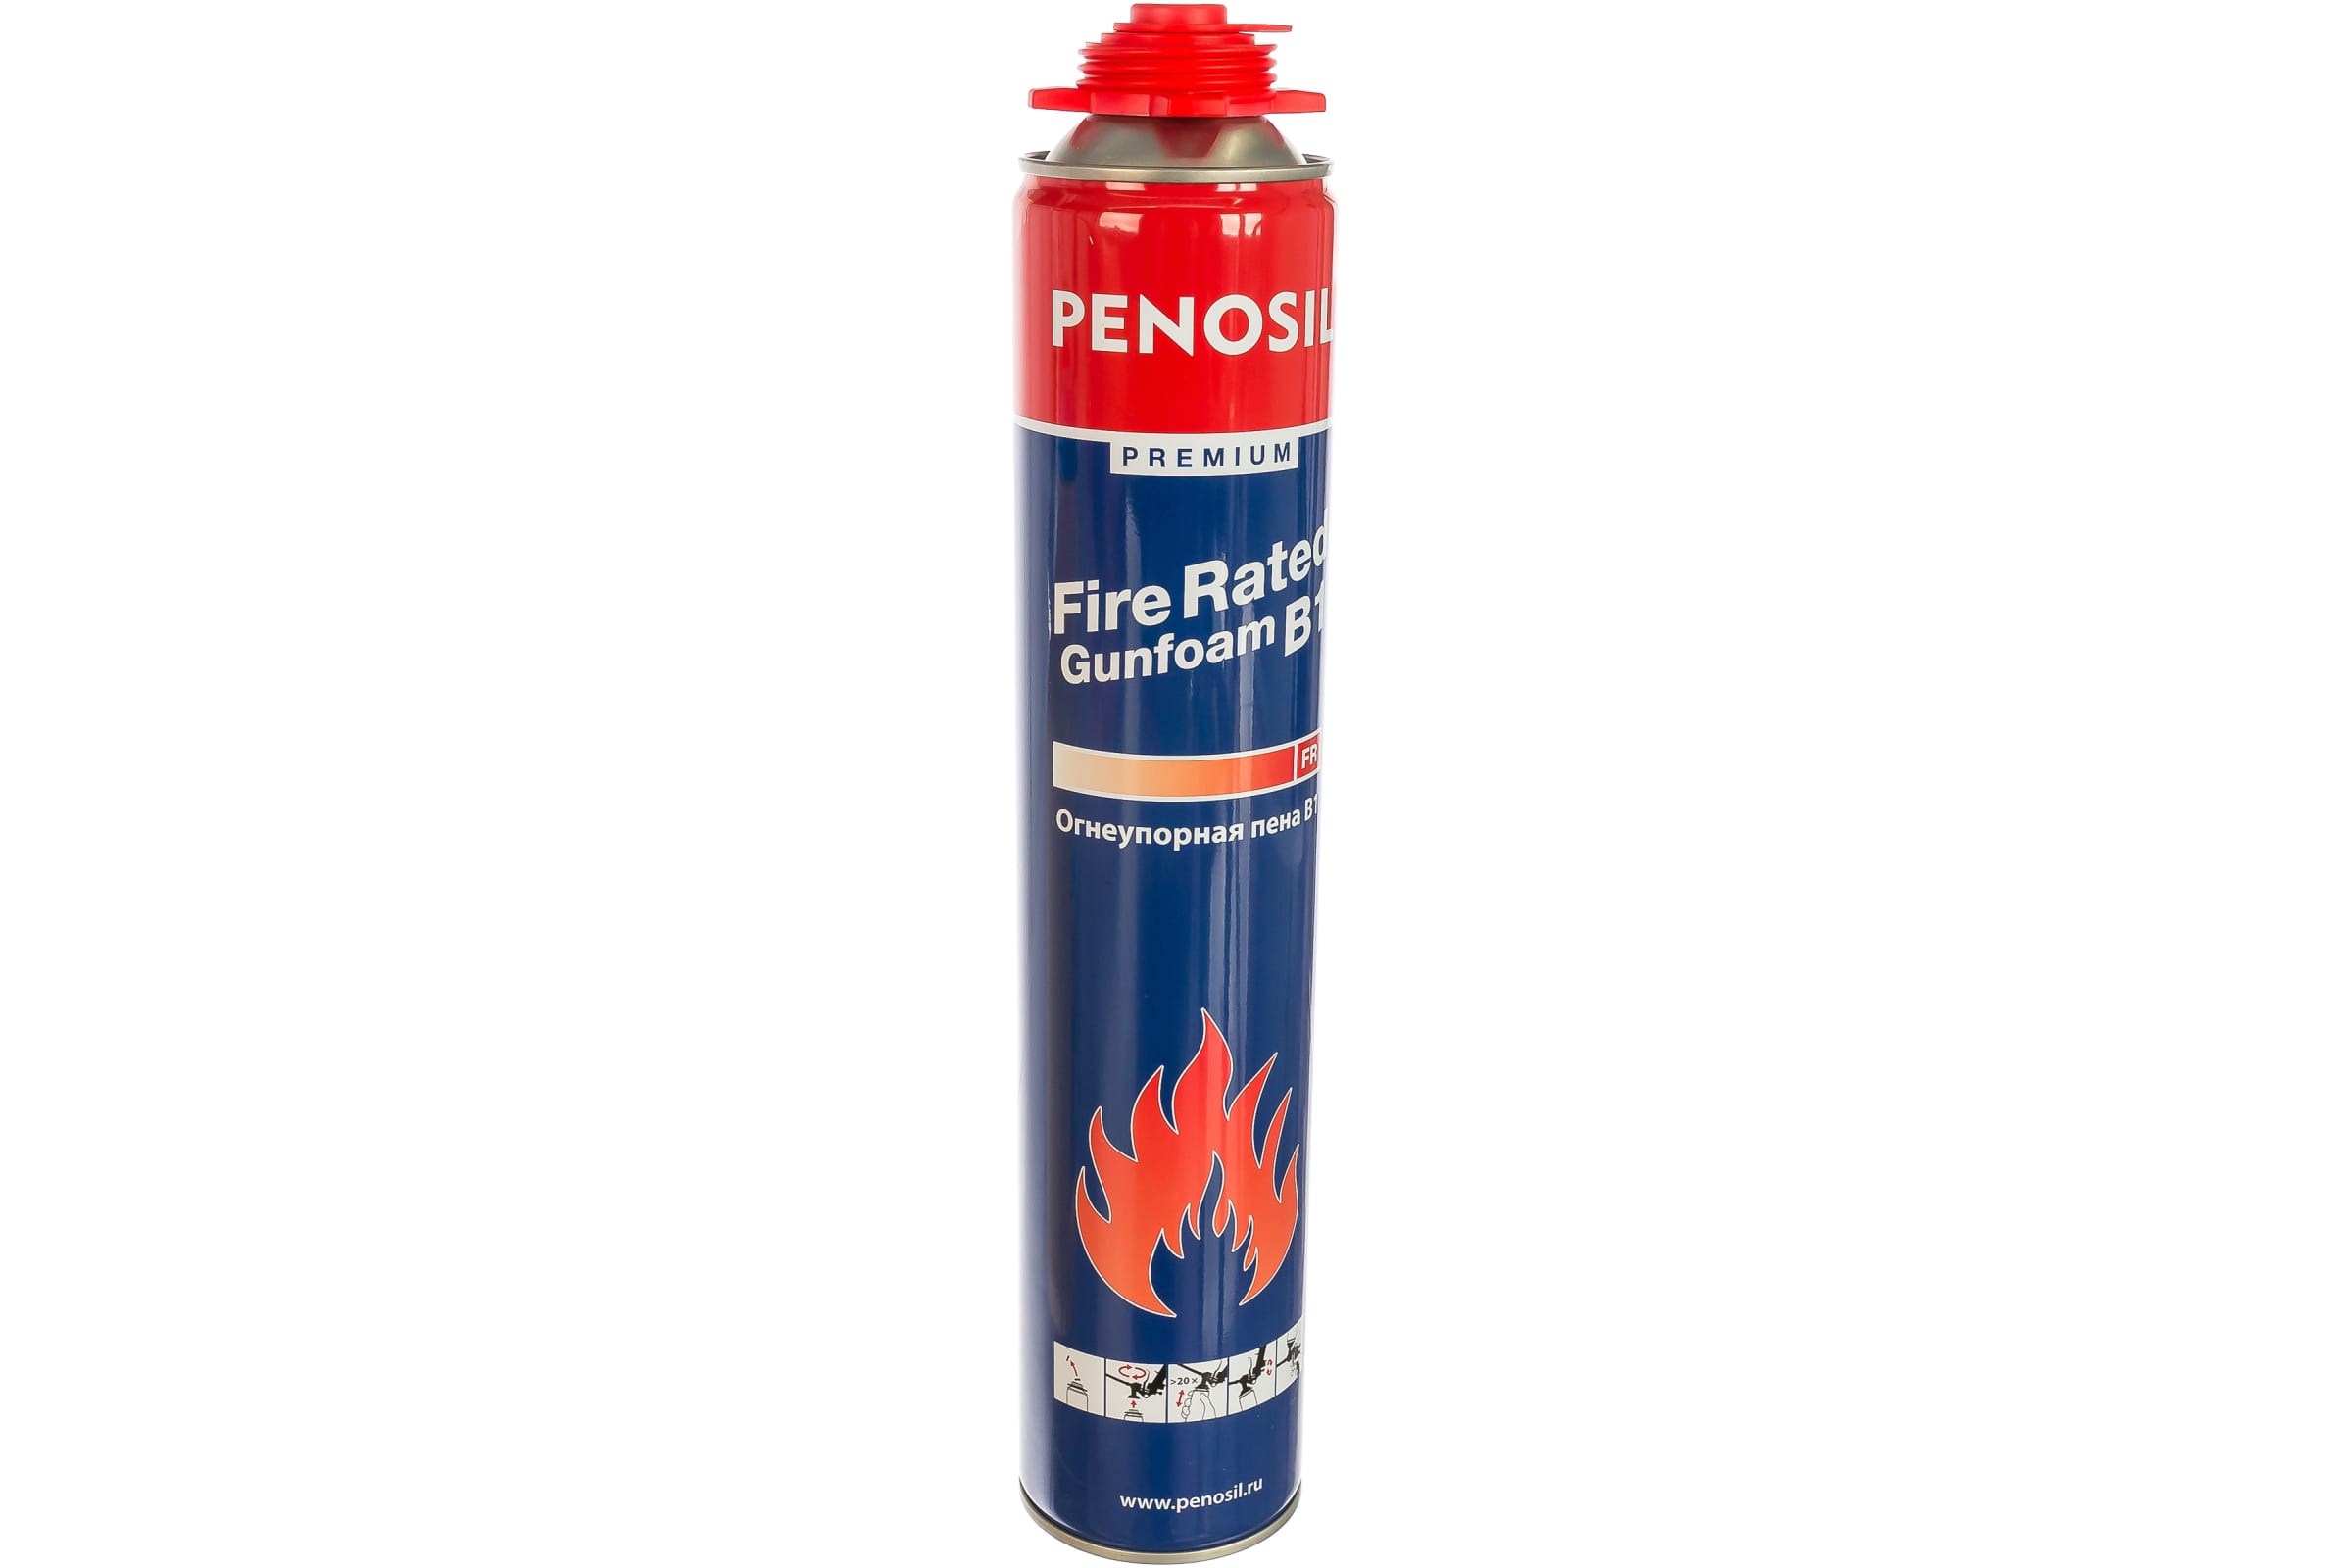 Огнеупорная профессиональная монтажная пена Penosil Premium Fire Rated Gunfoam B1 720 ml A